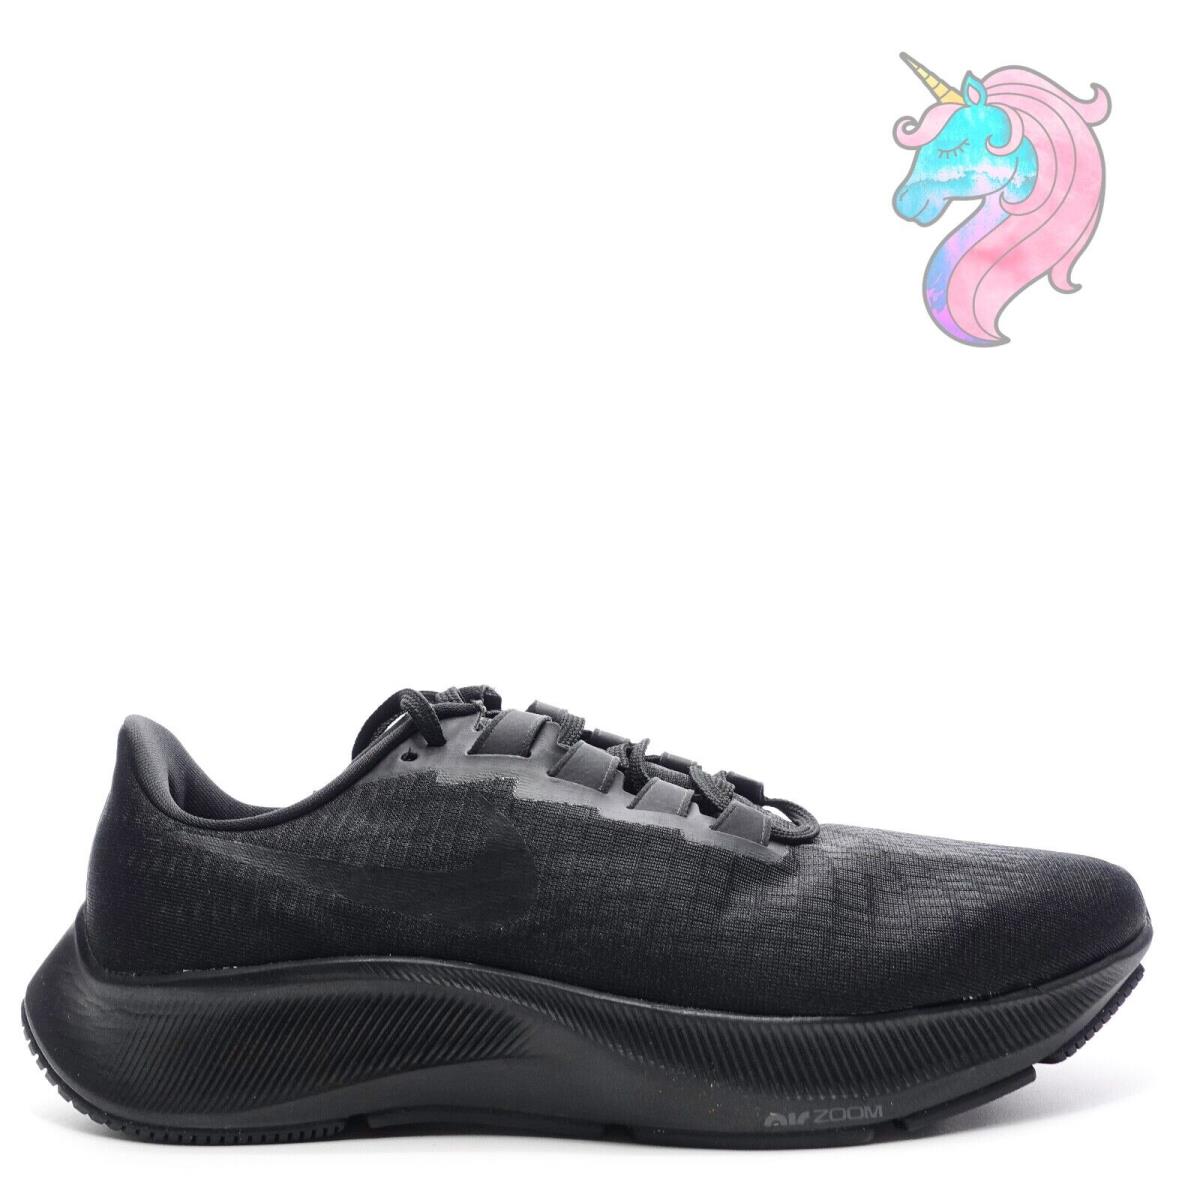 Nike Air Zoom Pegasus 37 Triple Black Running Shoes Mens Size 11.5 BQ9646-005 - Black